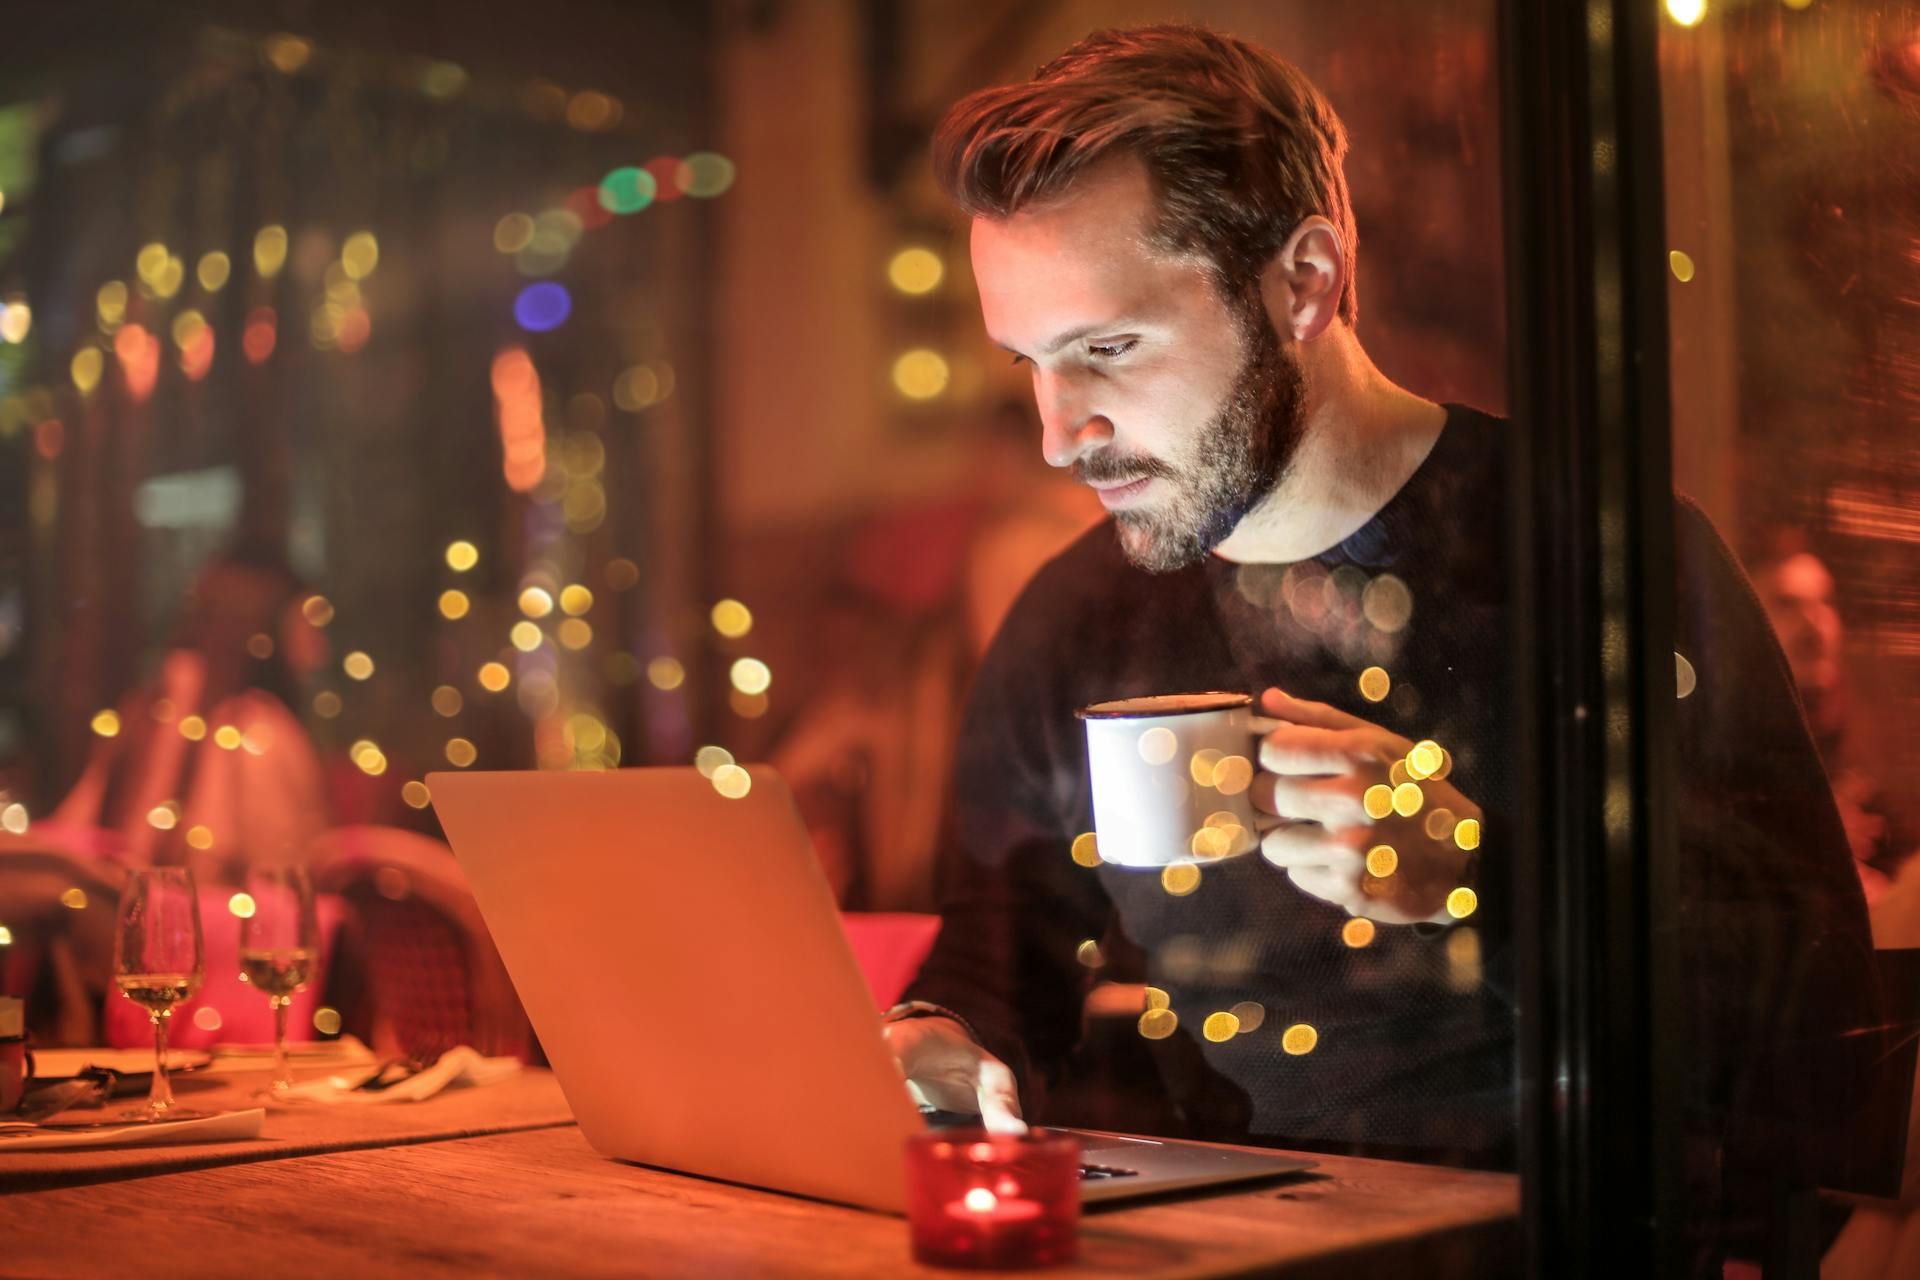 Man using internet at night